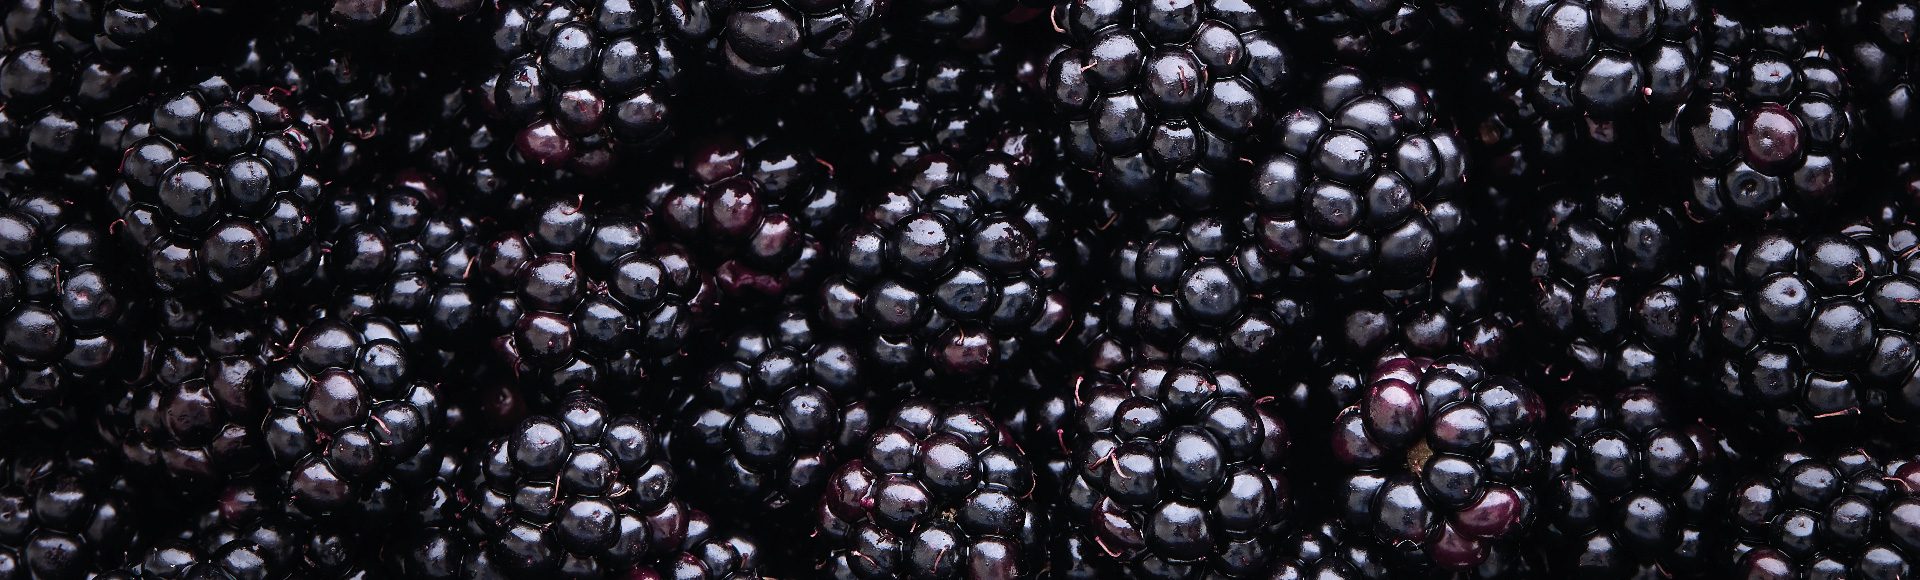 blackberry fertiliser and crop nutrition